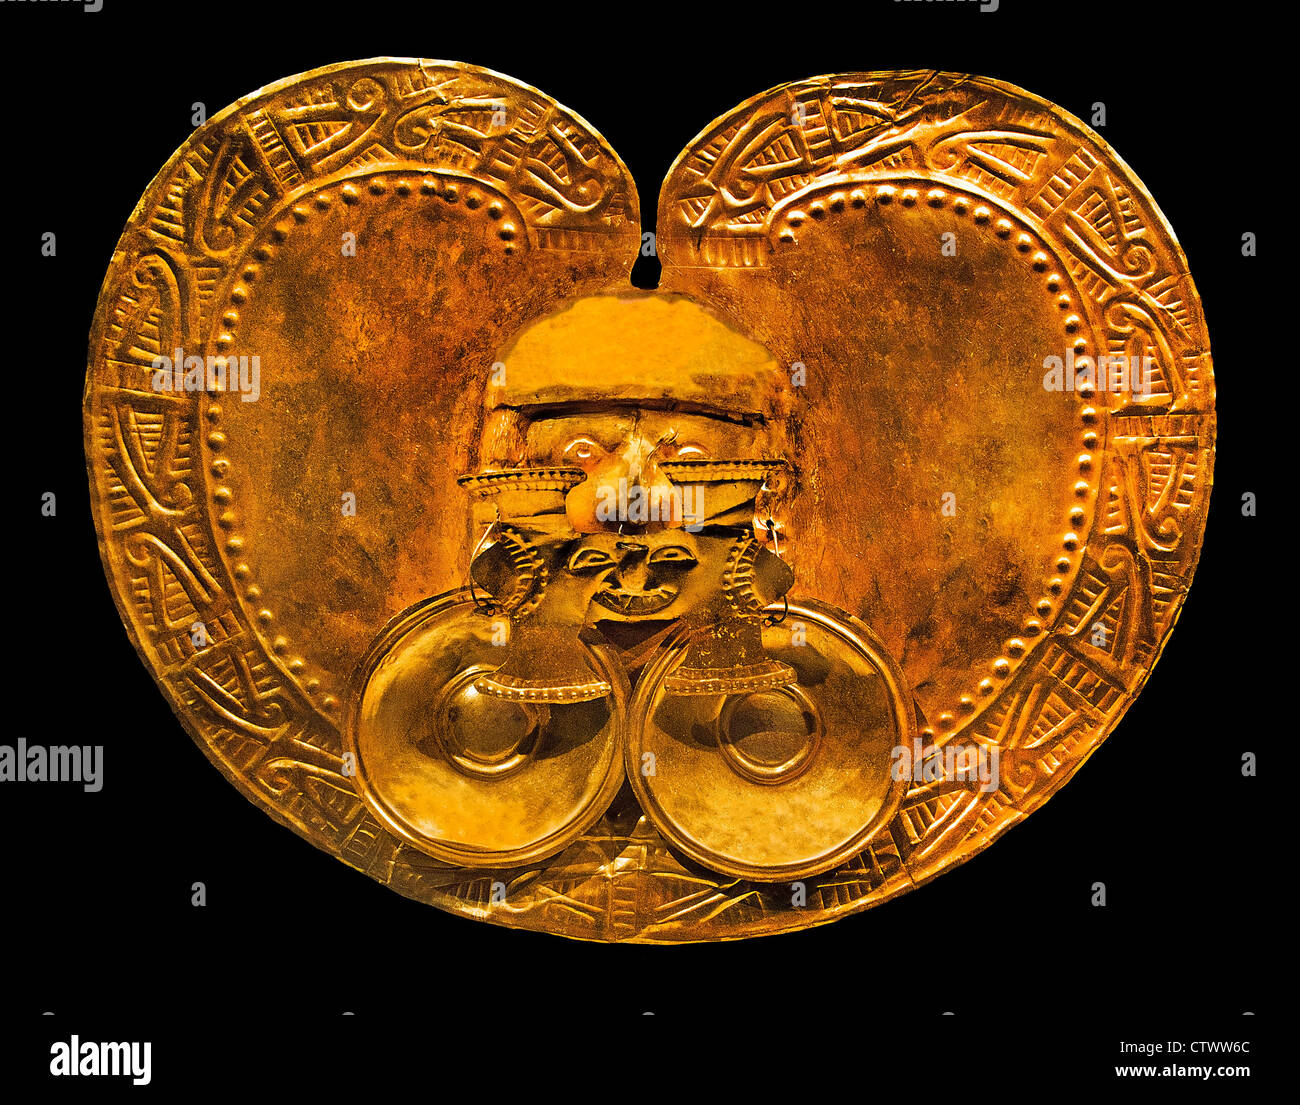 Brust mit Gesicht 1. – 7. Jahrhundert Kolumbien Kultur Calima - Yotoco Gold H. 8 3/4 X W. 11 x D. 1 3/8 Zoll (22,2 x 27,9 x 3,5 cm) Stockfoto